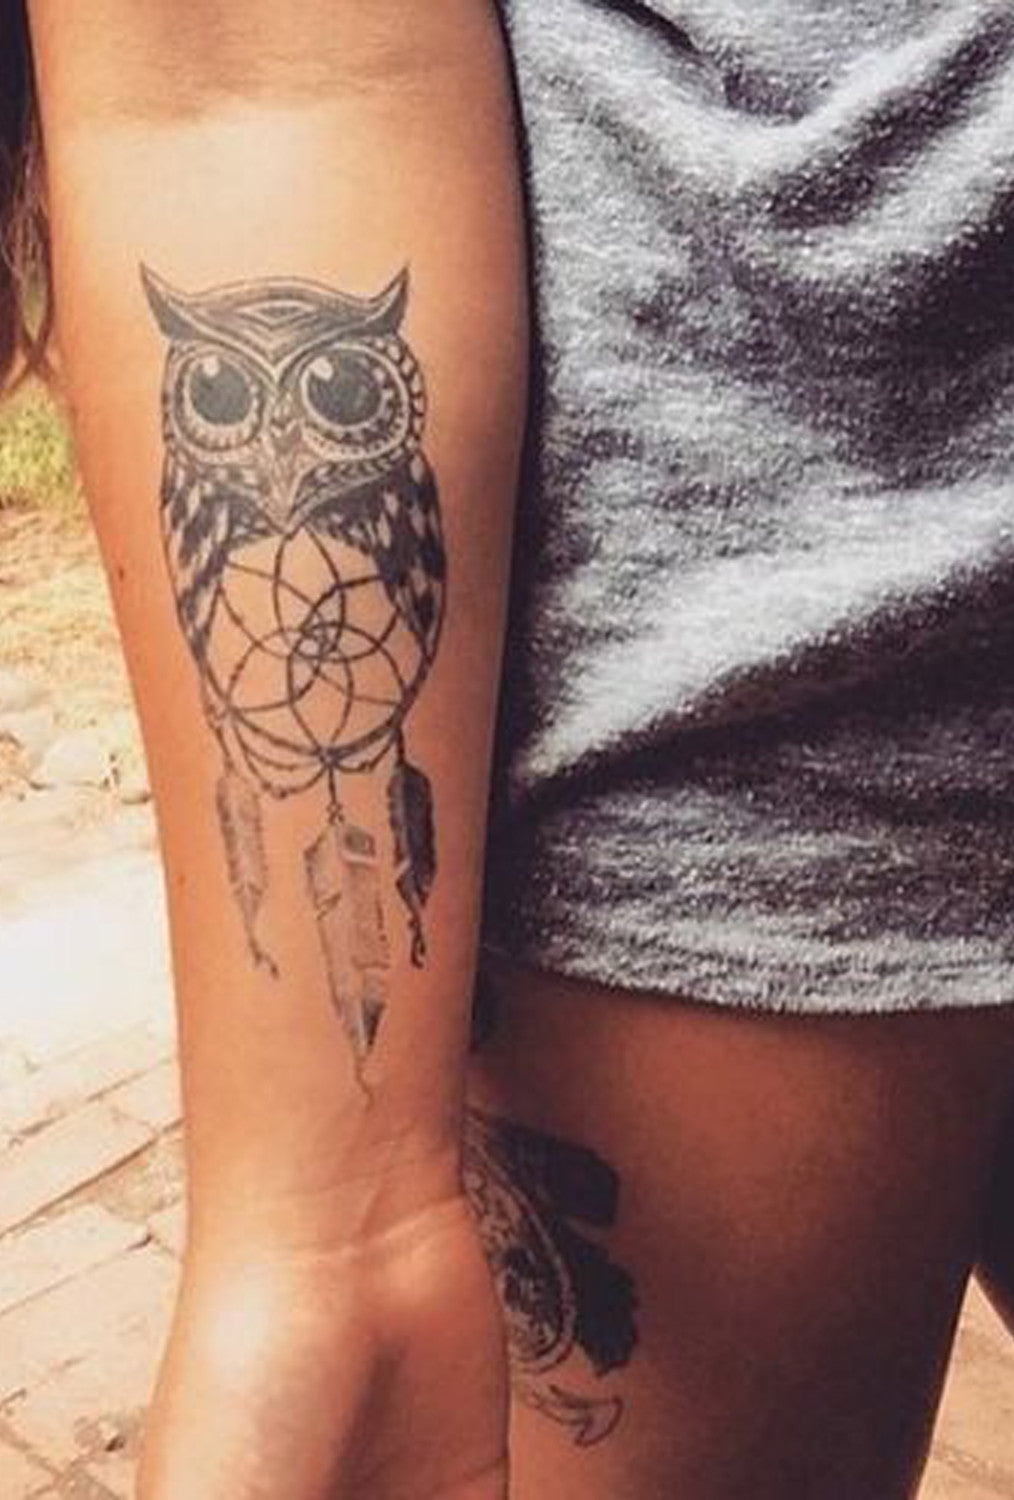 Small Forearm Owl Tattoo Ideas for Women - Dreamcatcher Arm Tat - MyBodiArt.com